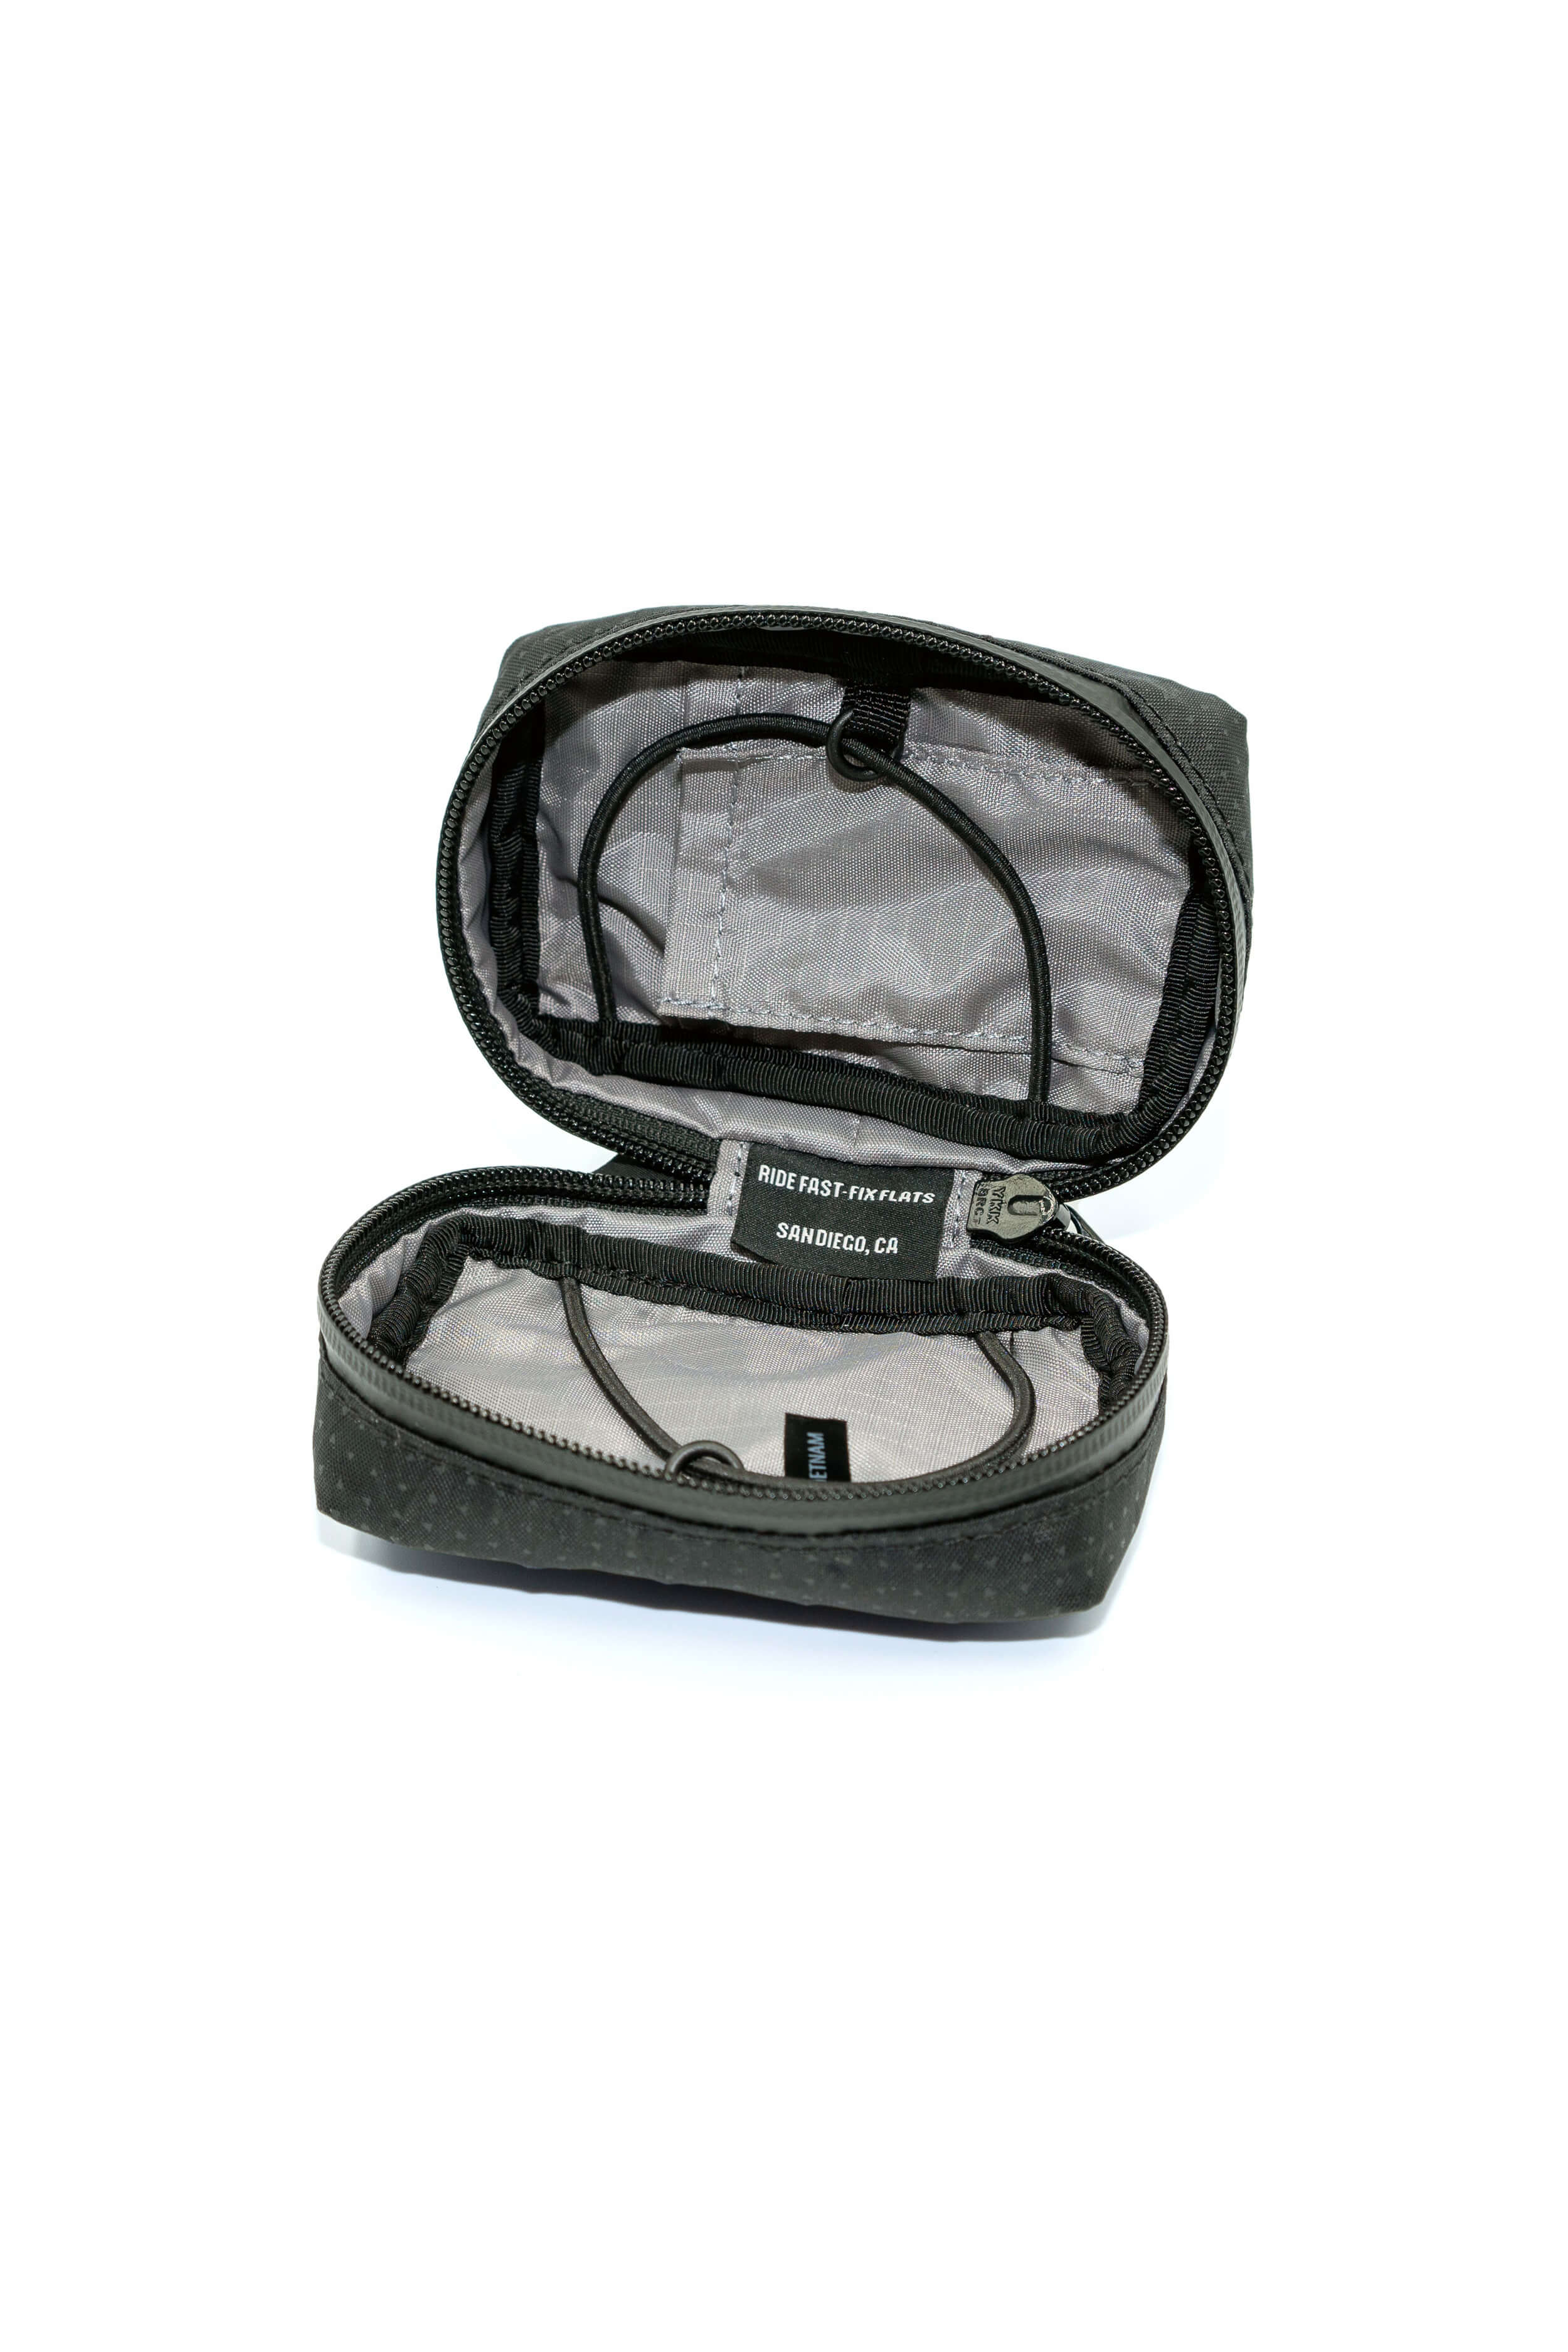 Saddle Bag HC Accessories  - Orucase